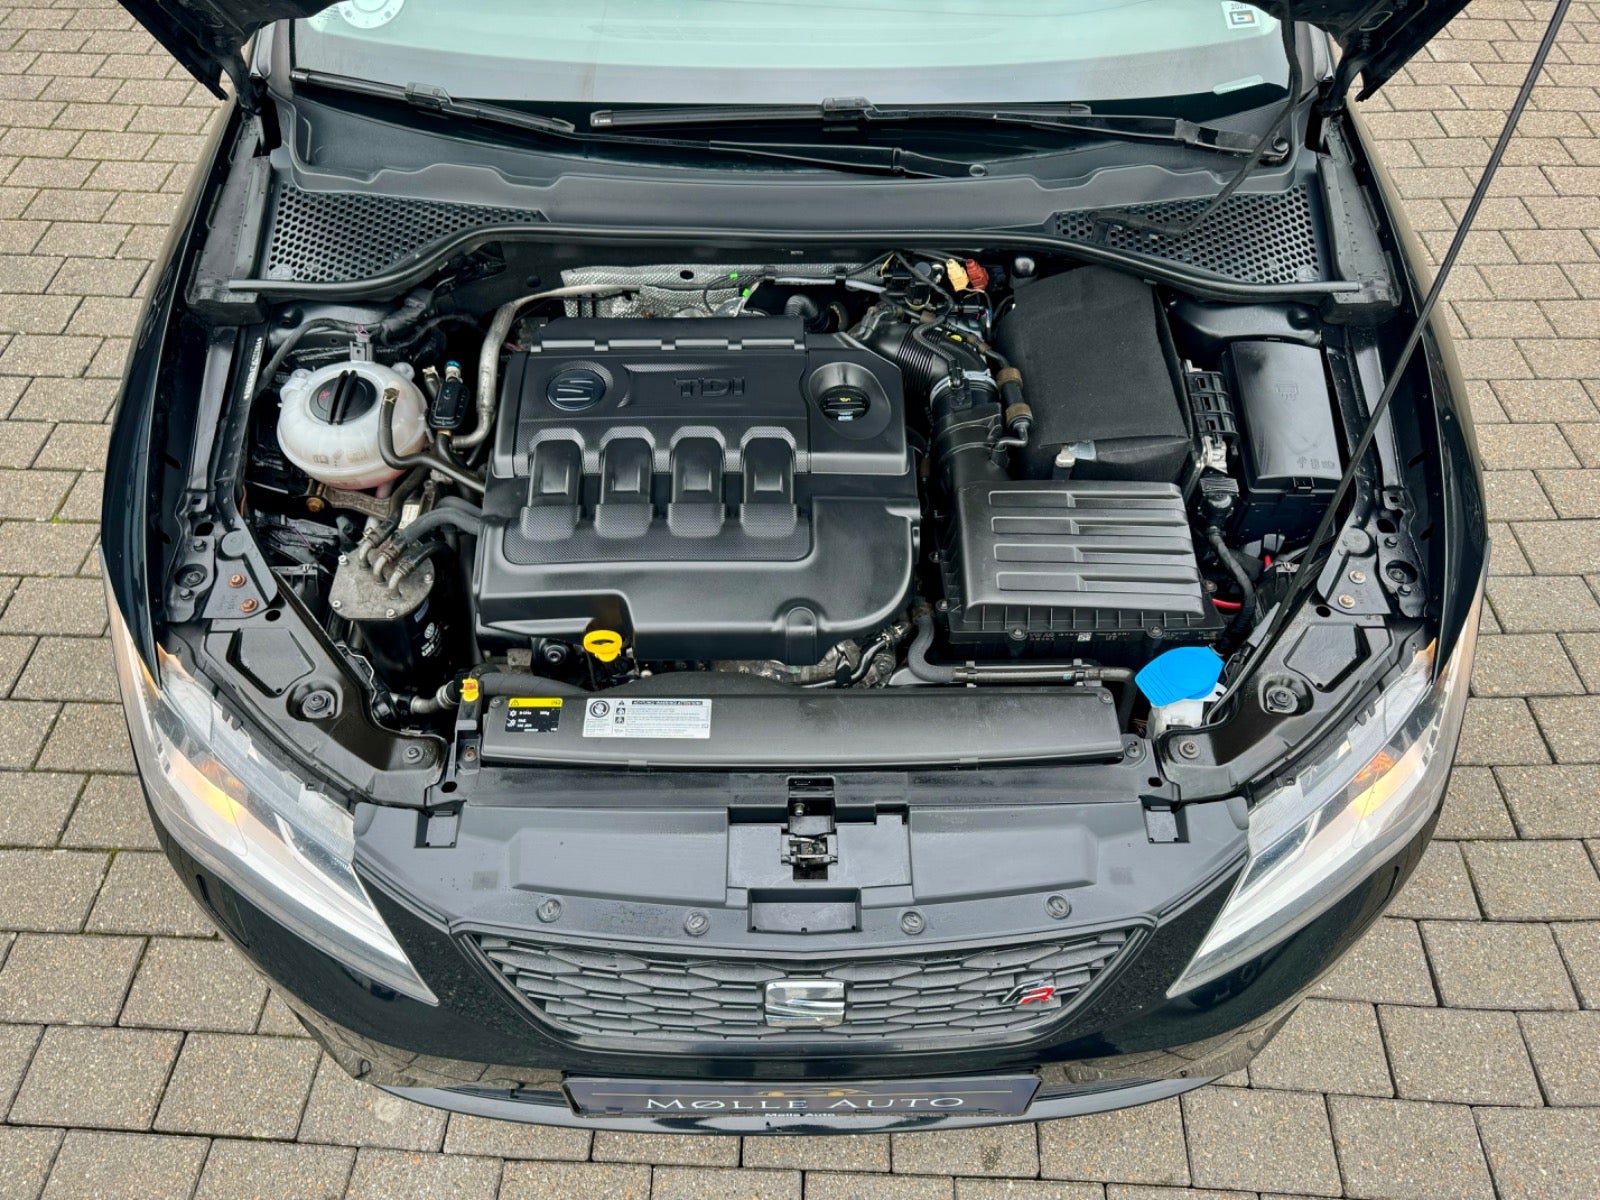 Seat Leon 2,0 TDi 150 FR ST eco Diesel modelår 2015 km 289000